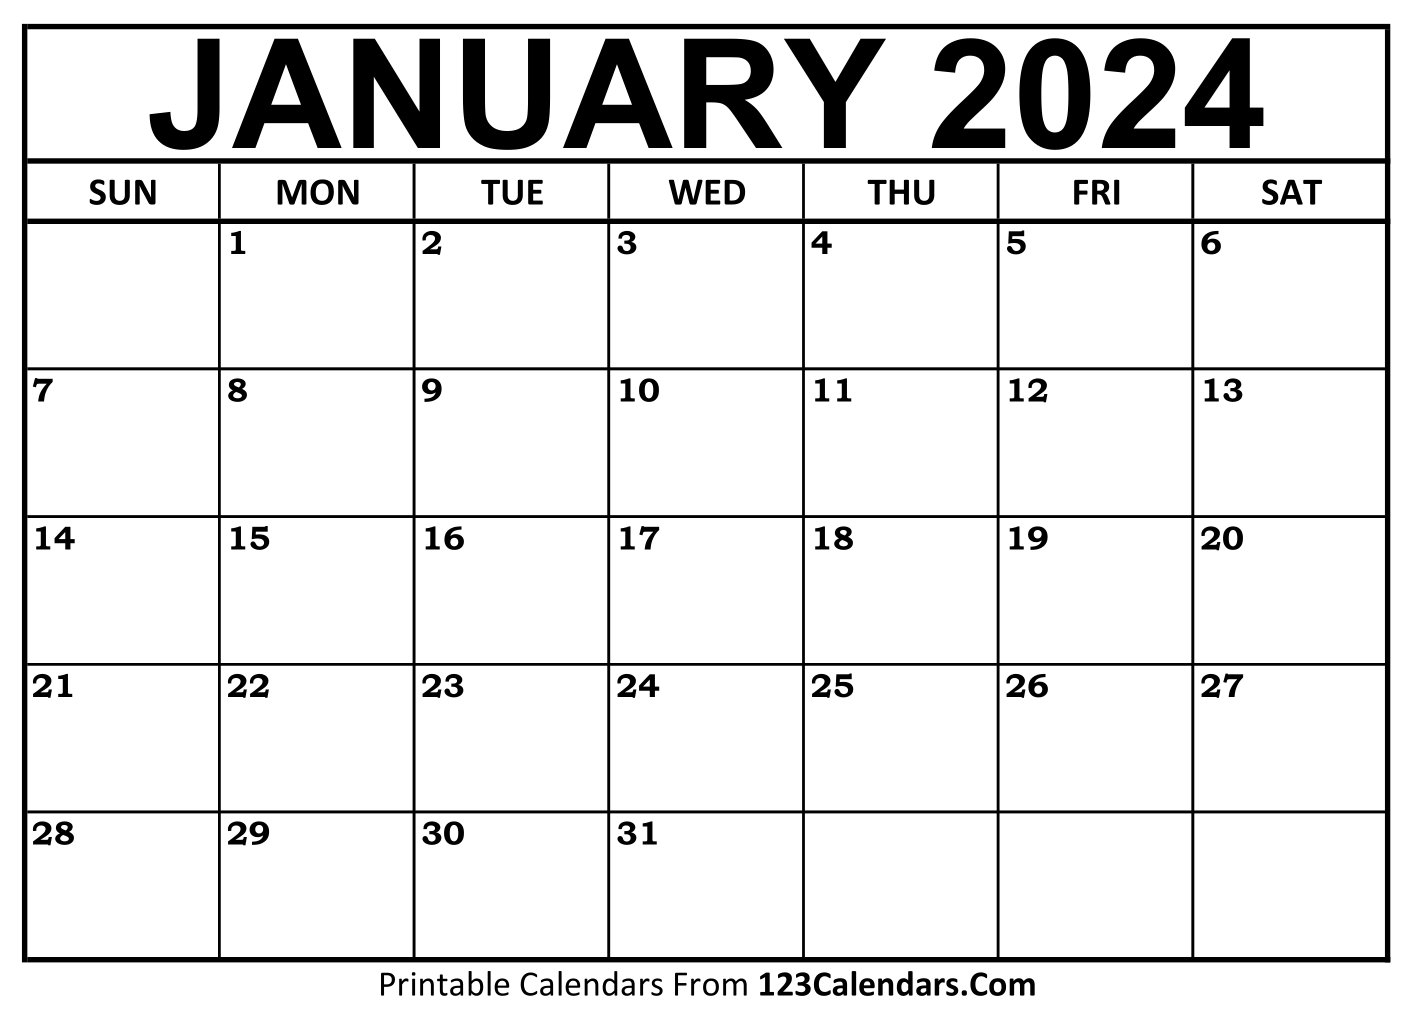 Printable January 2024 Calendar Templates - 123Calendars for Month Of January 2024 Printable Calendar